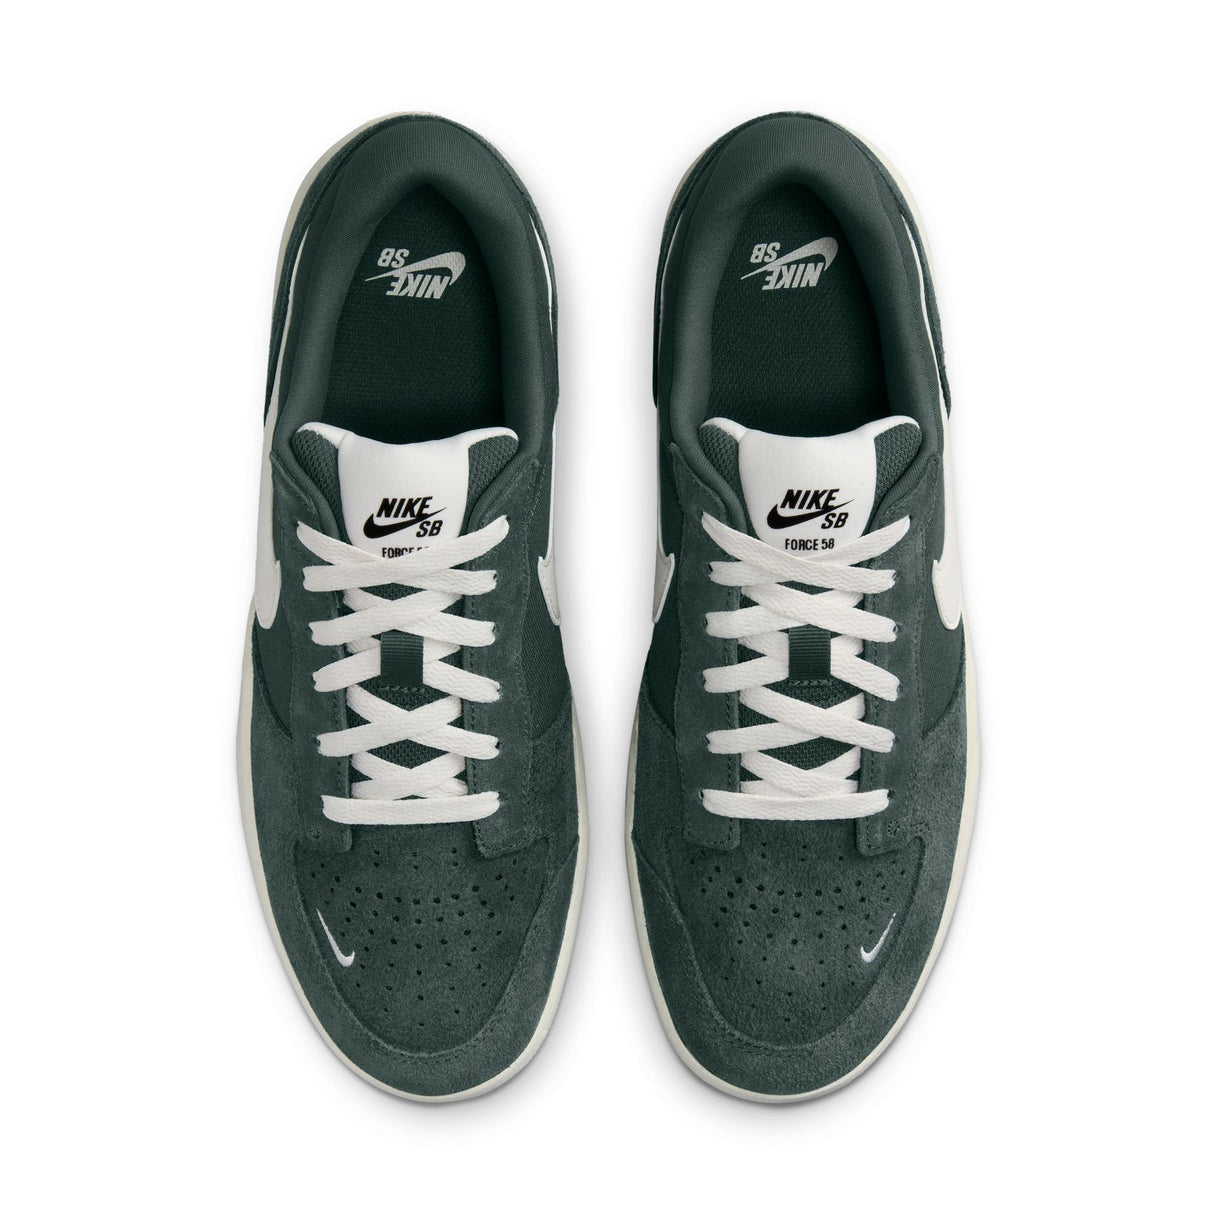 Nike SB Force 58 Vintage Green/Sail Shoes